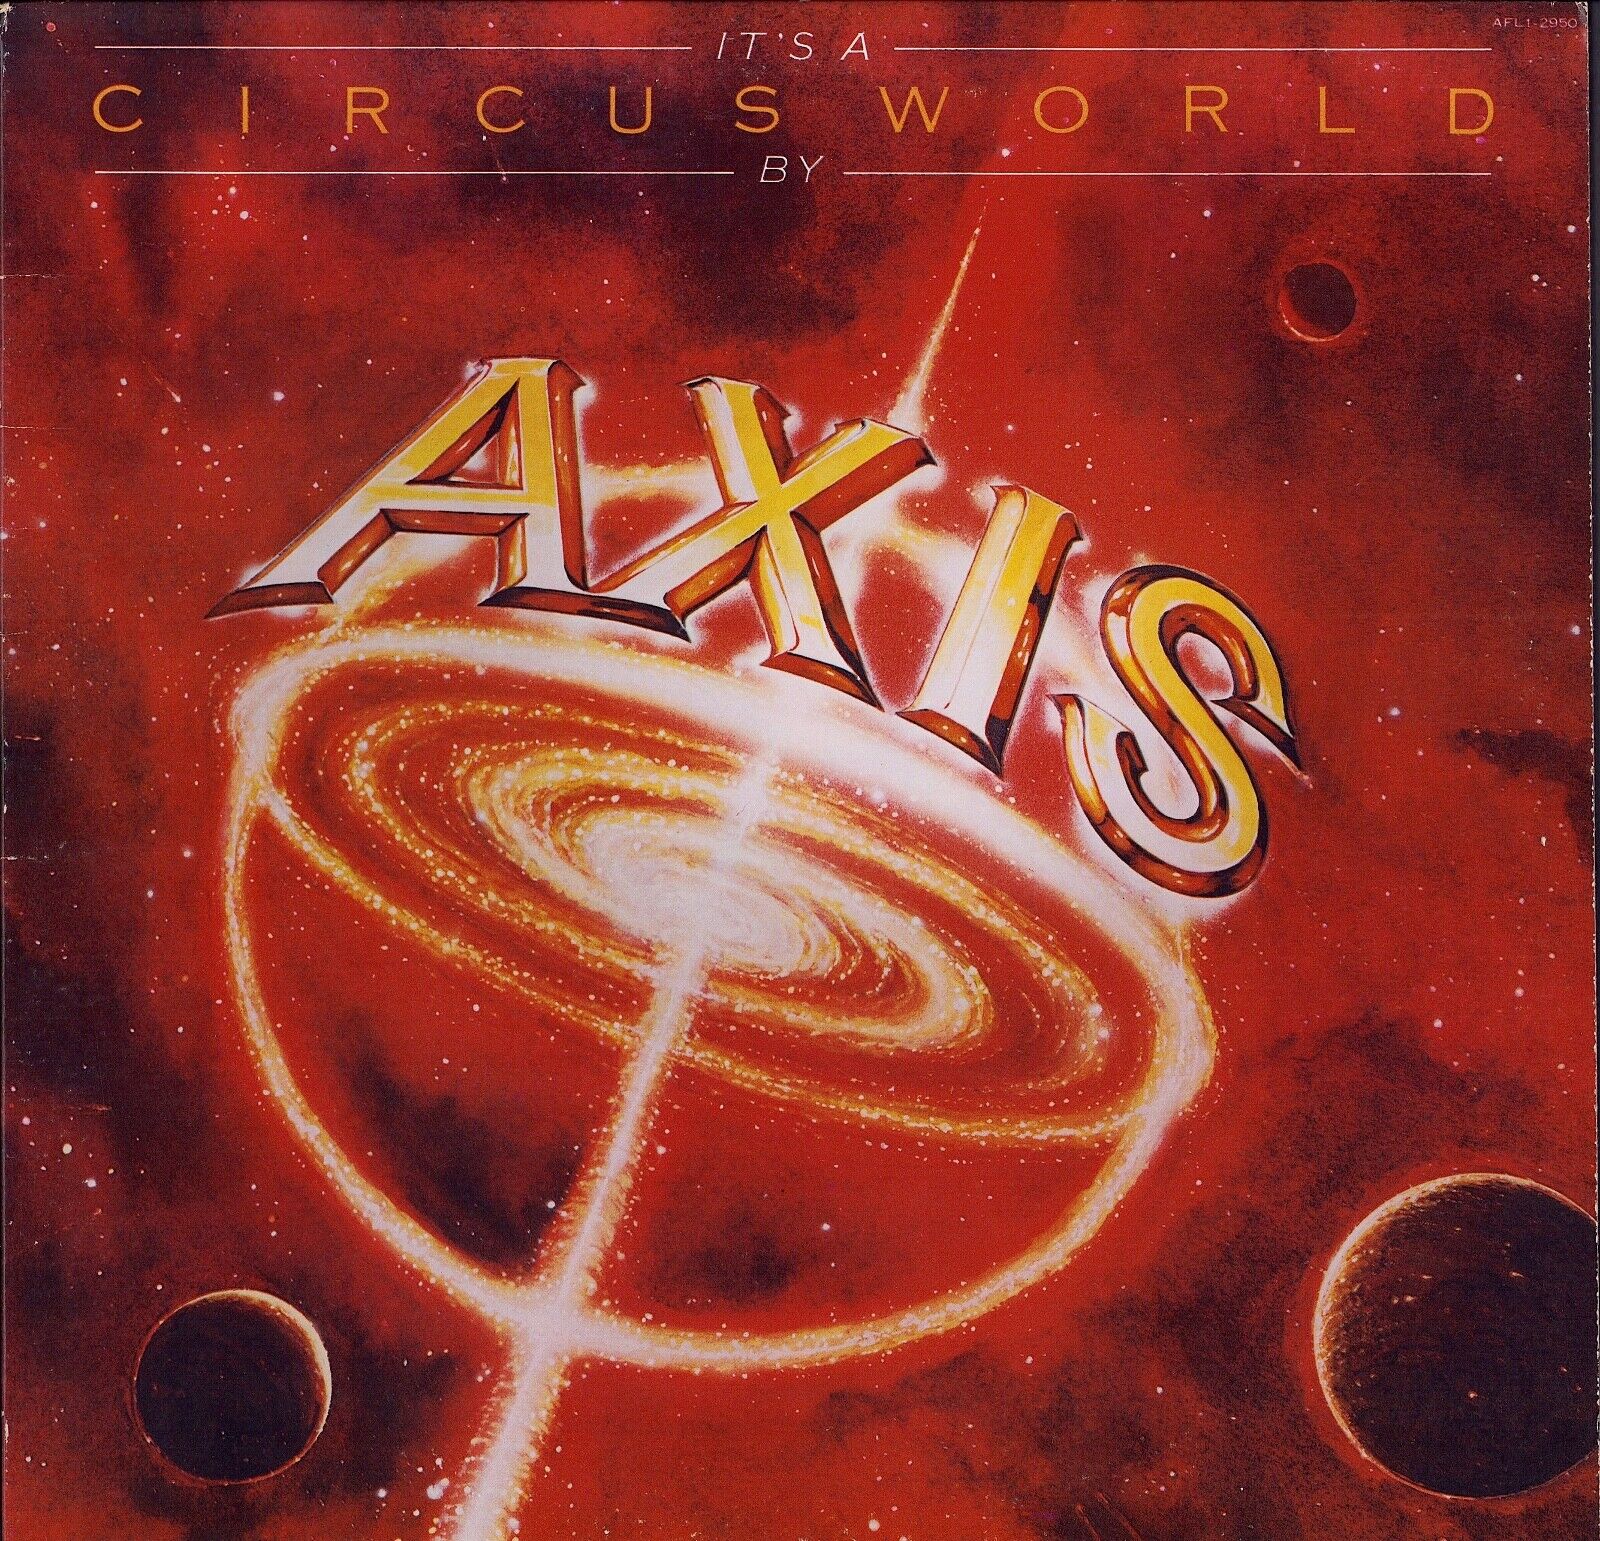 Axis - It's A Circus World Vinyl LP